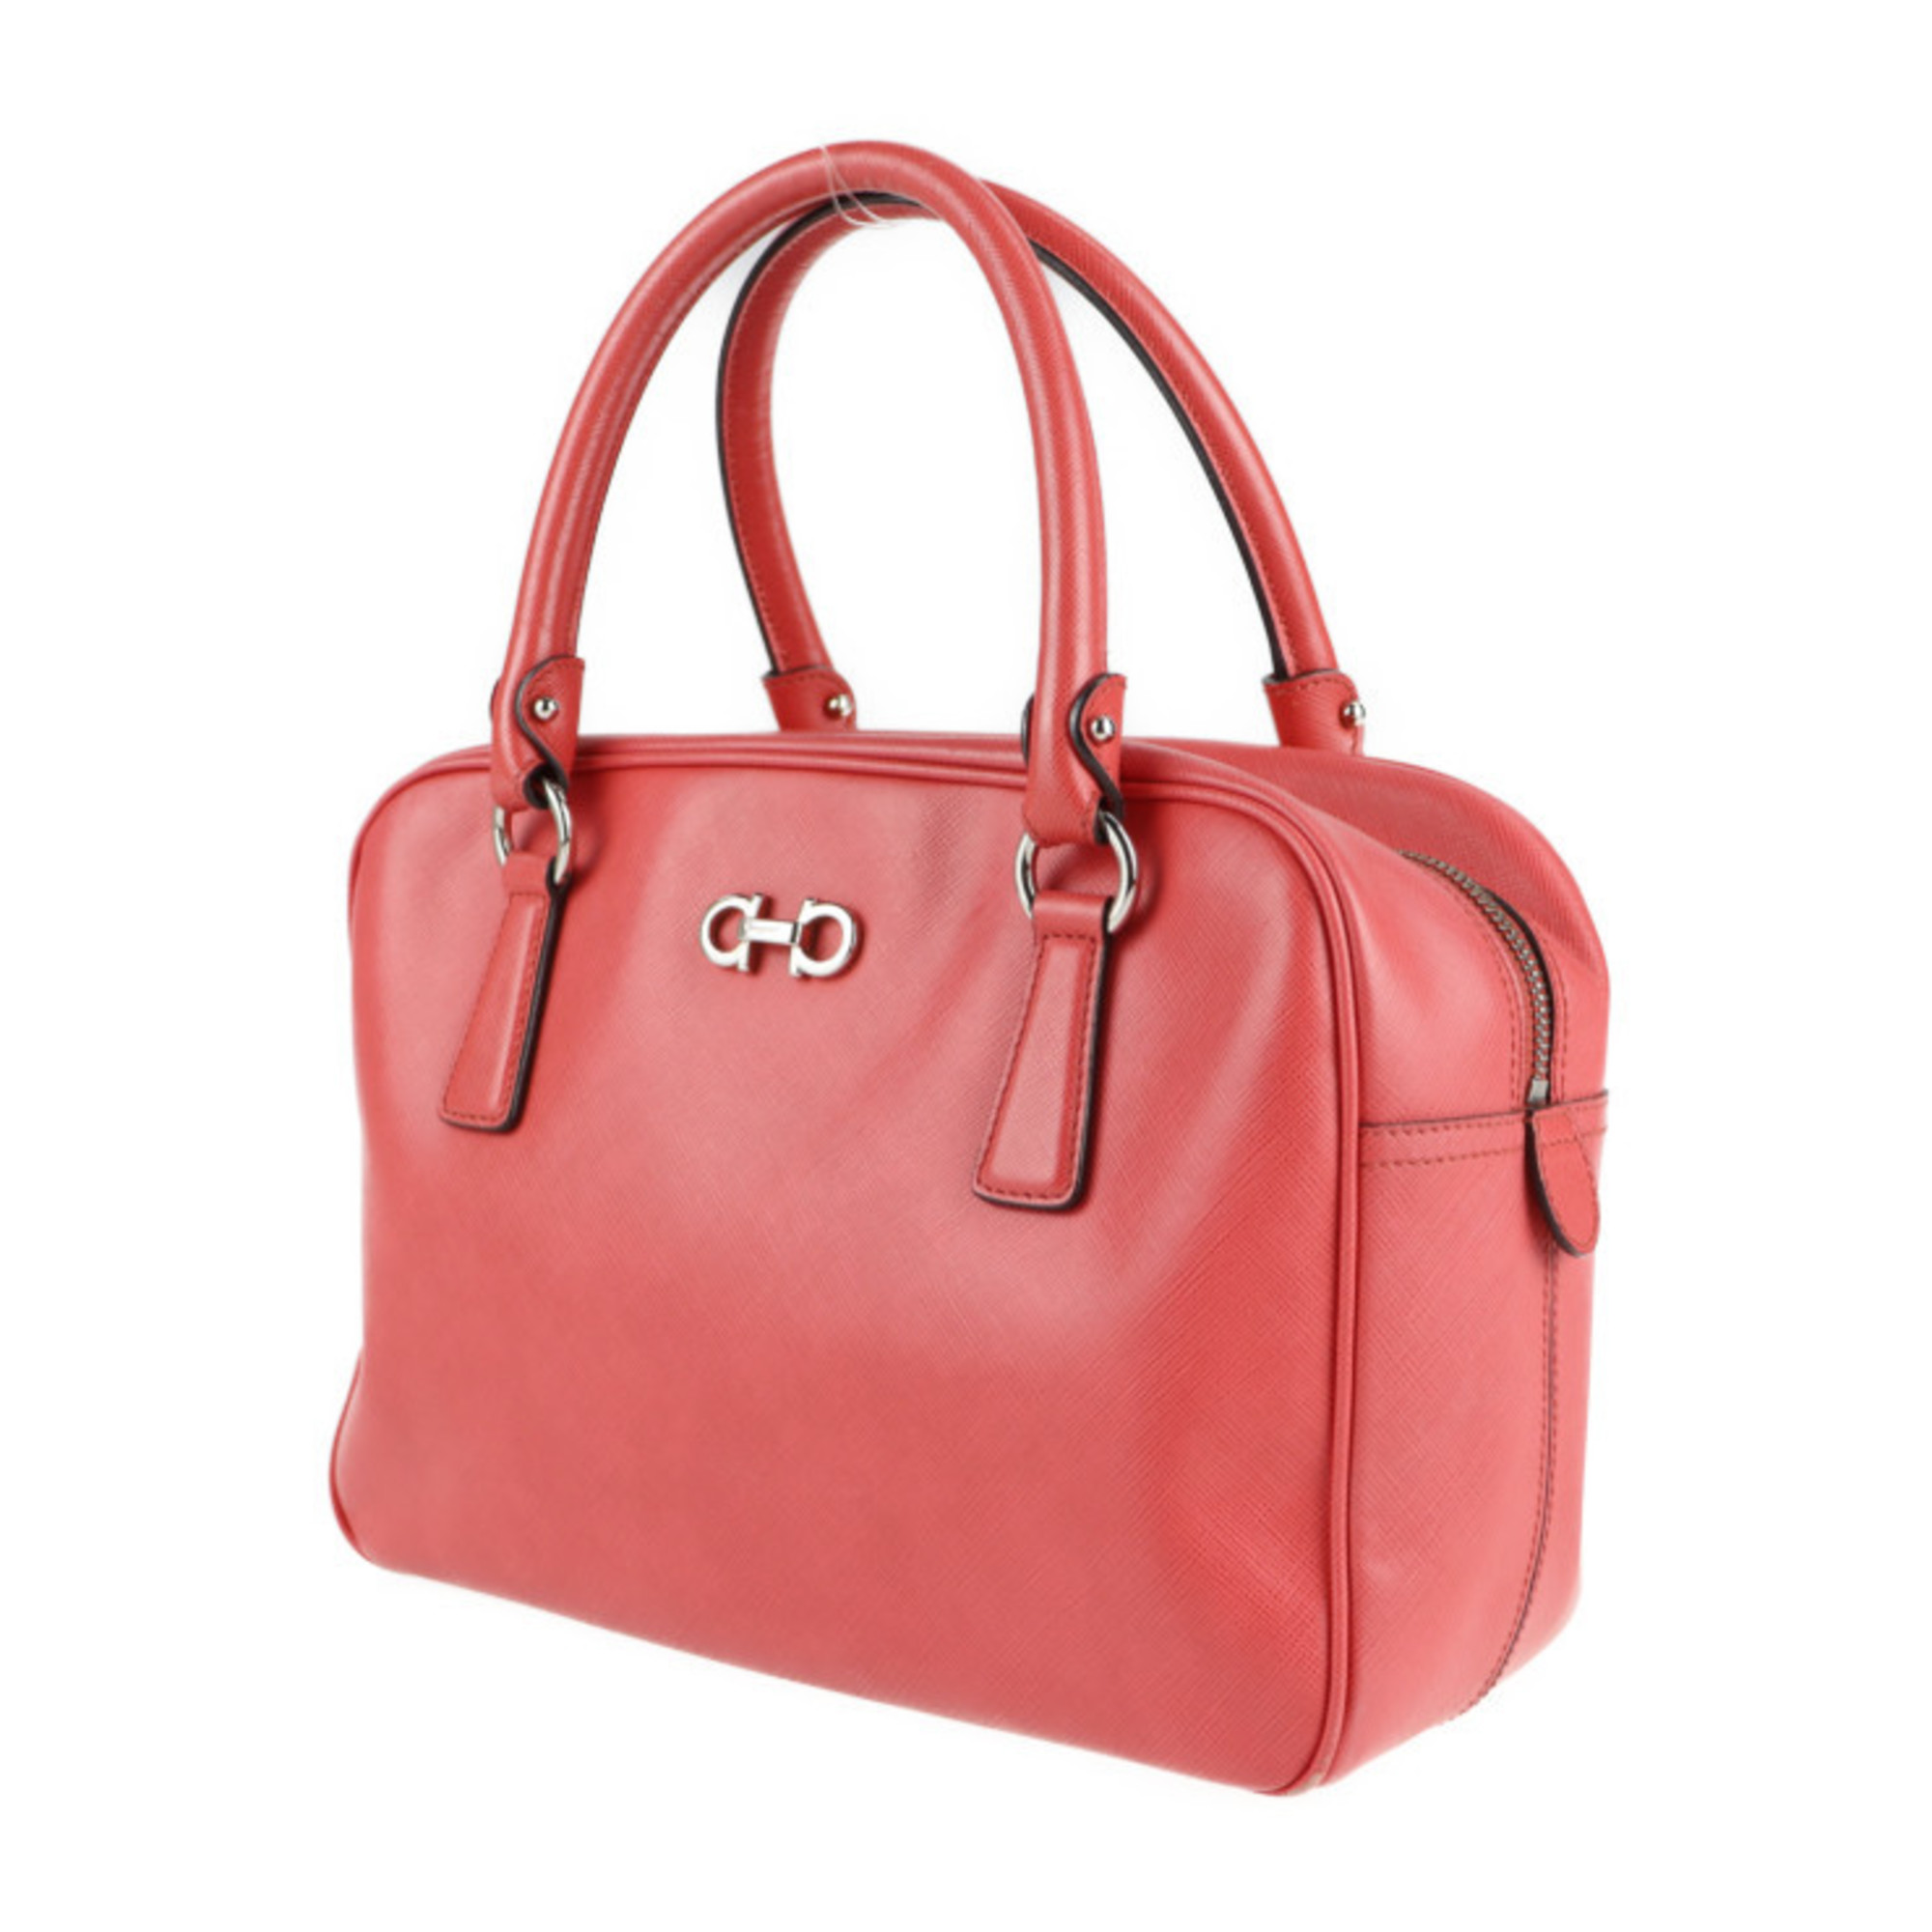 Salvatore Ferragamo Gancini handbag EE 21 B713 leather pink mini Boston bag